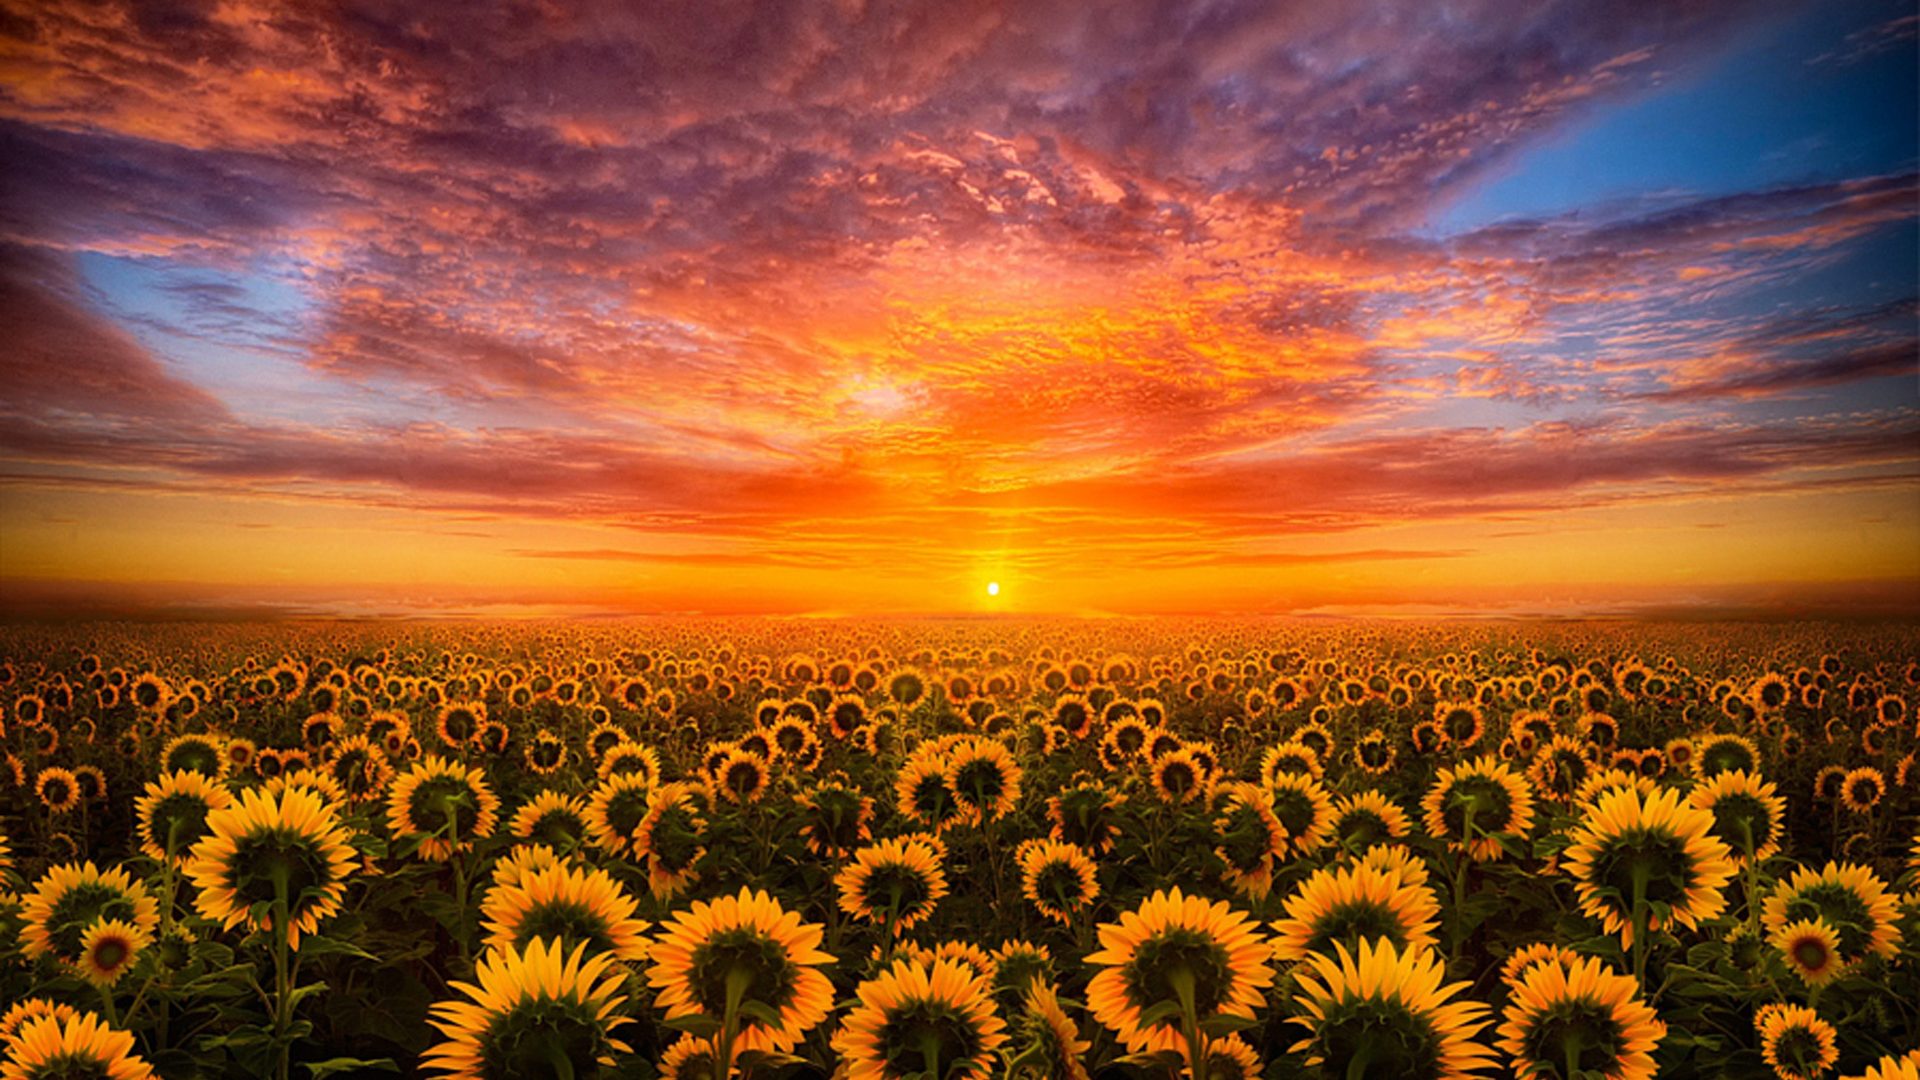 sunset desktop wallpaper,sunflower,sky,nature,flower,sunflower